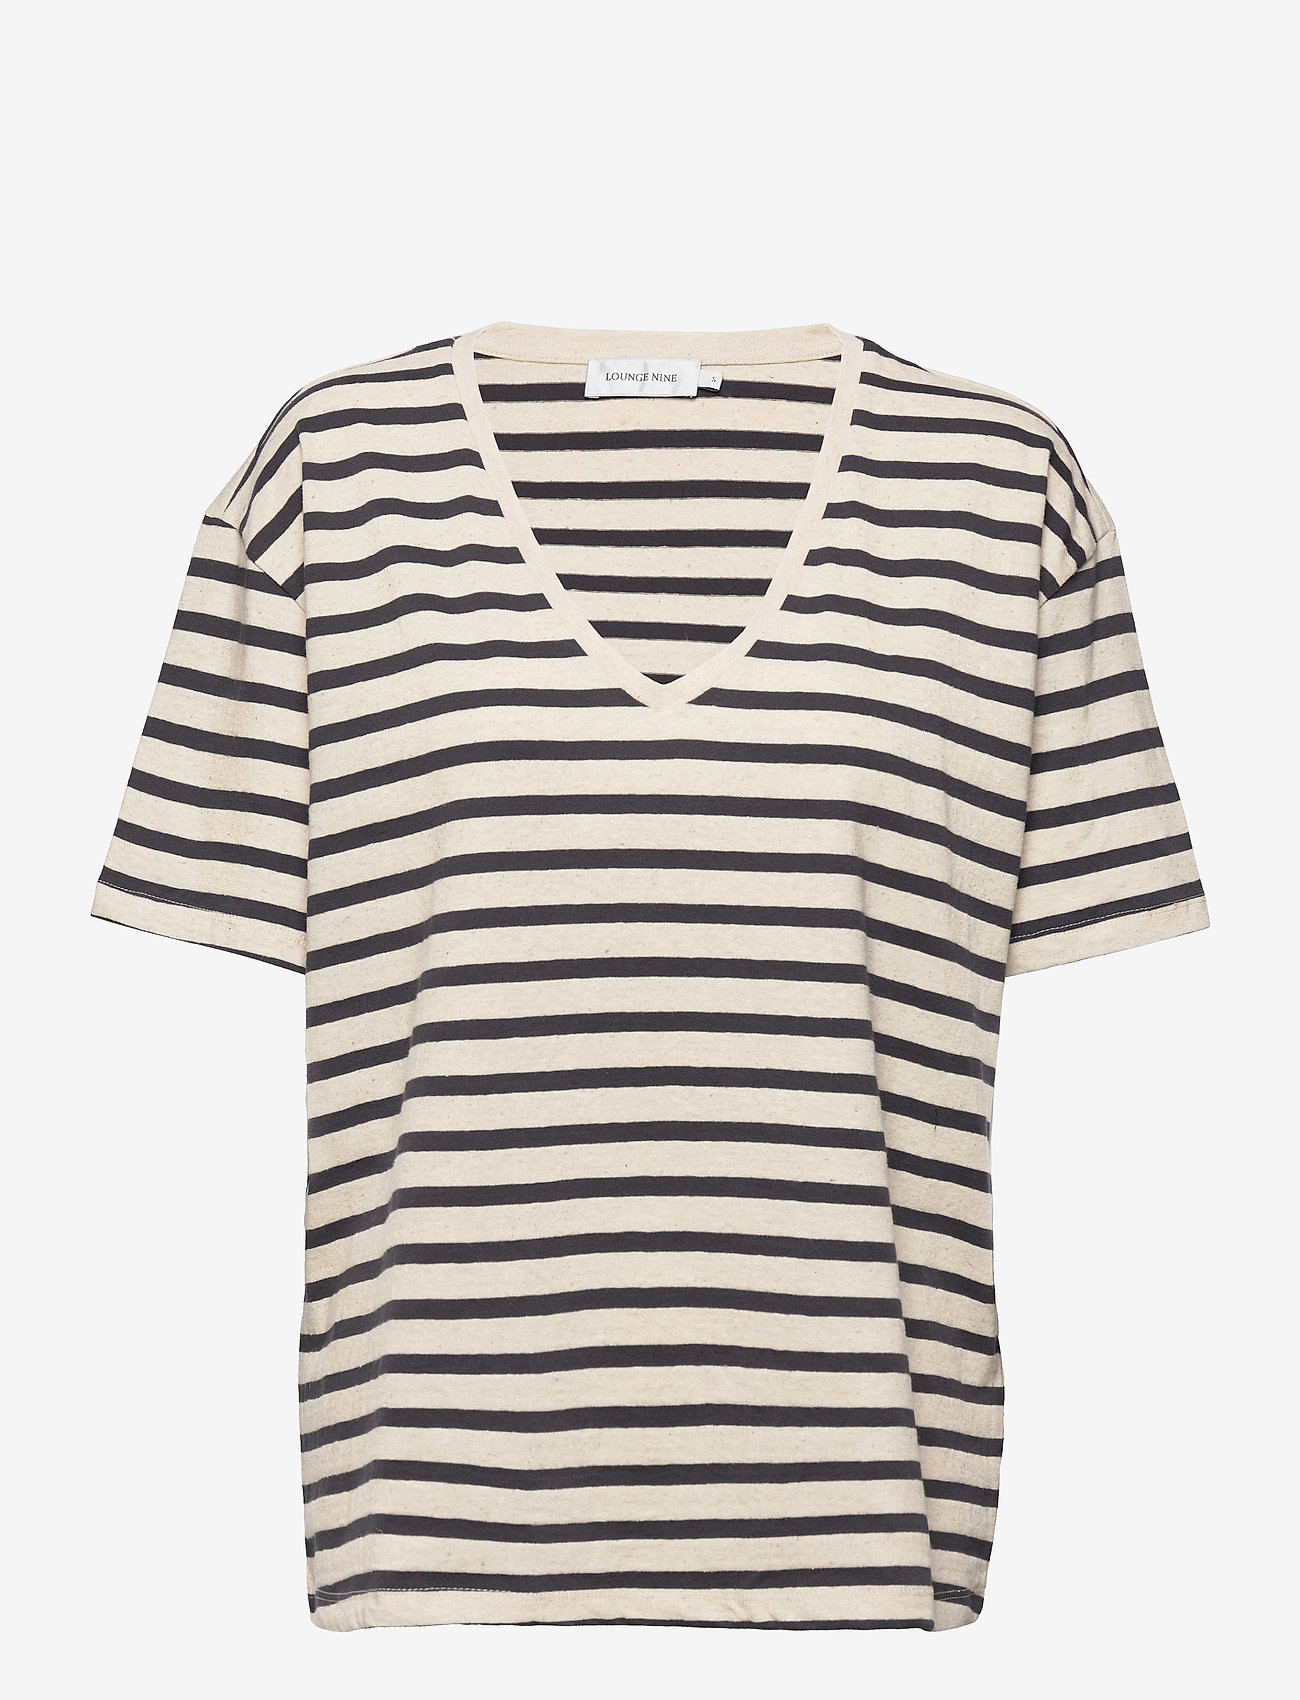 Lounge Nine - LNKya T-shirt - t-shirt & tops - navy oat stripe - 1